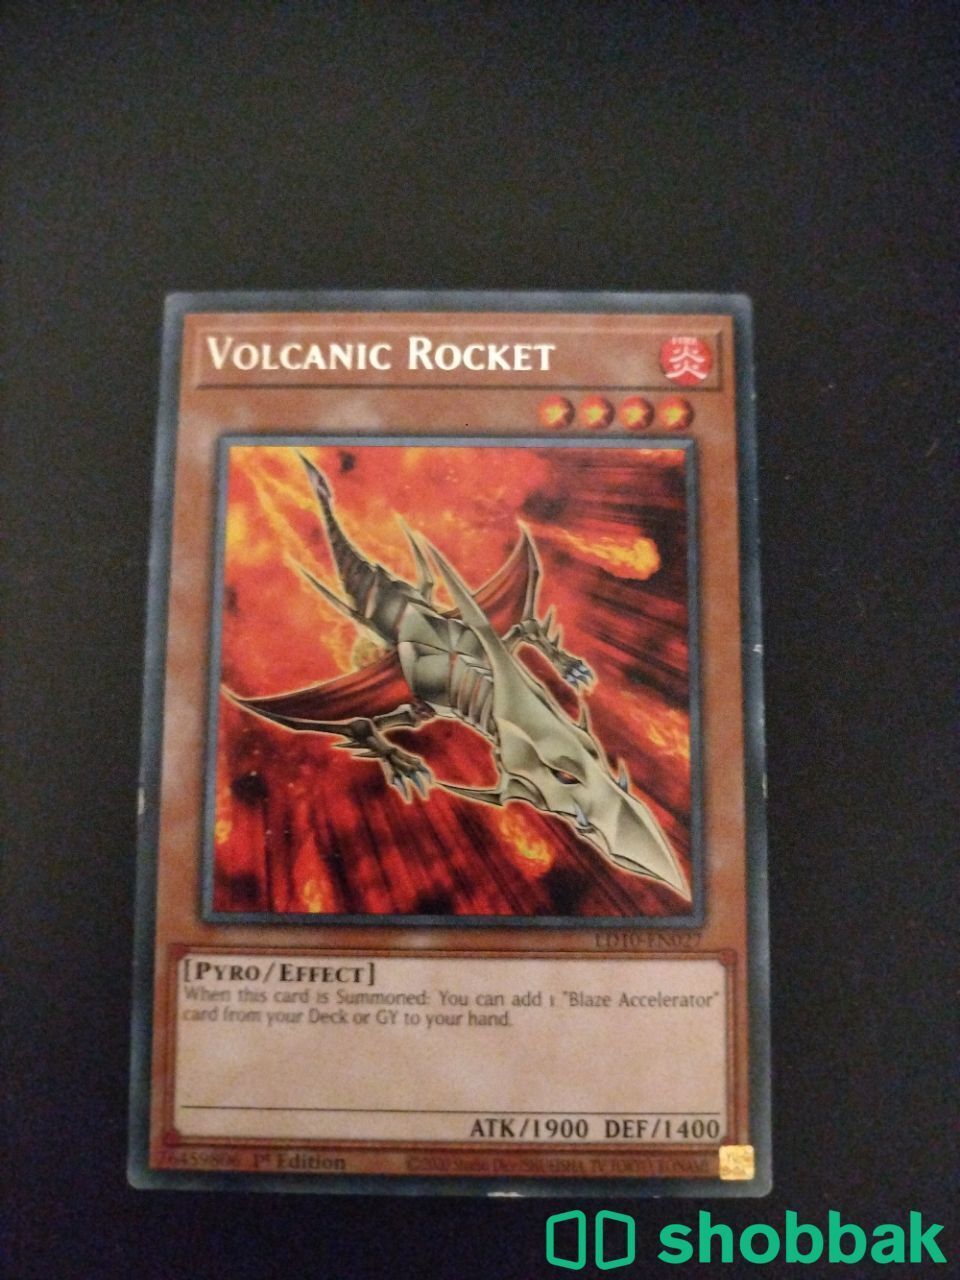 Volcanic Rocket yogiyoh card 1st edition  Shobbak Saudi Arabia